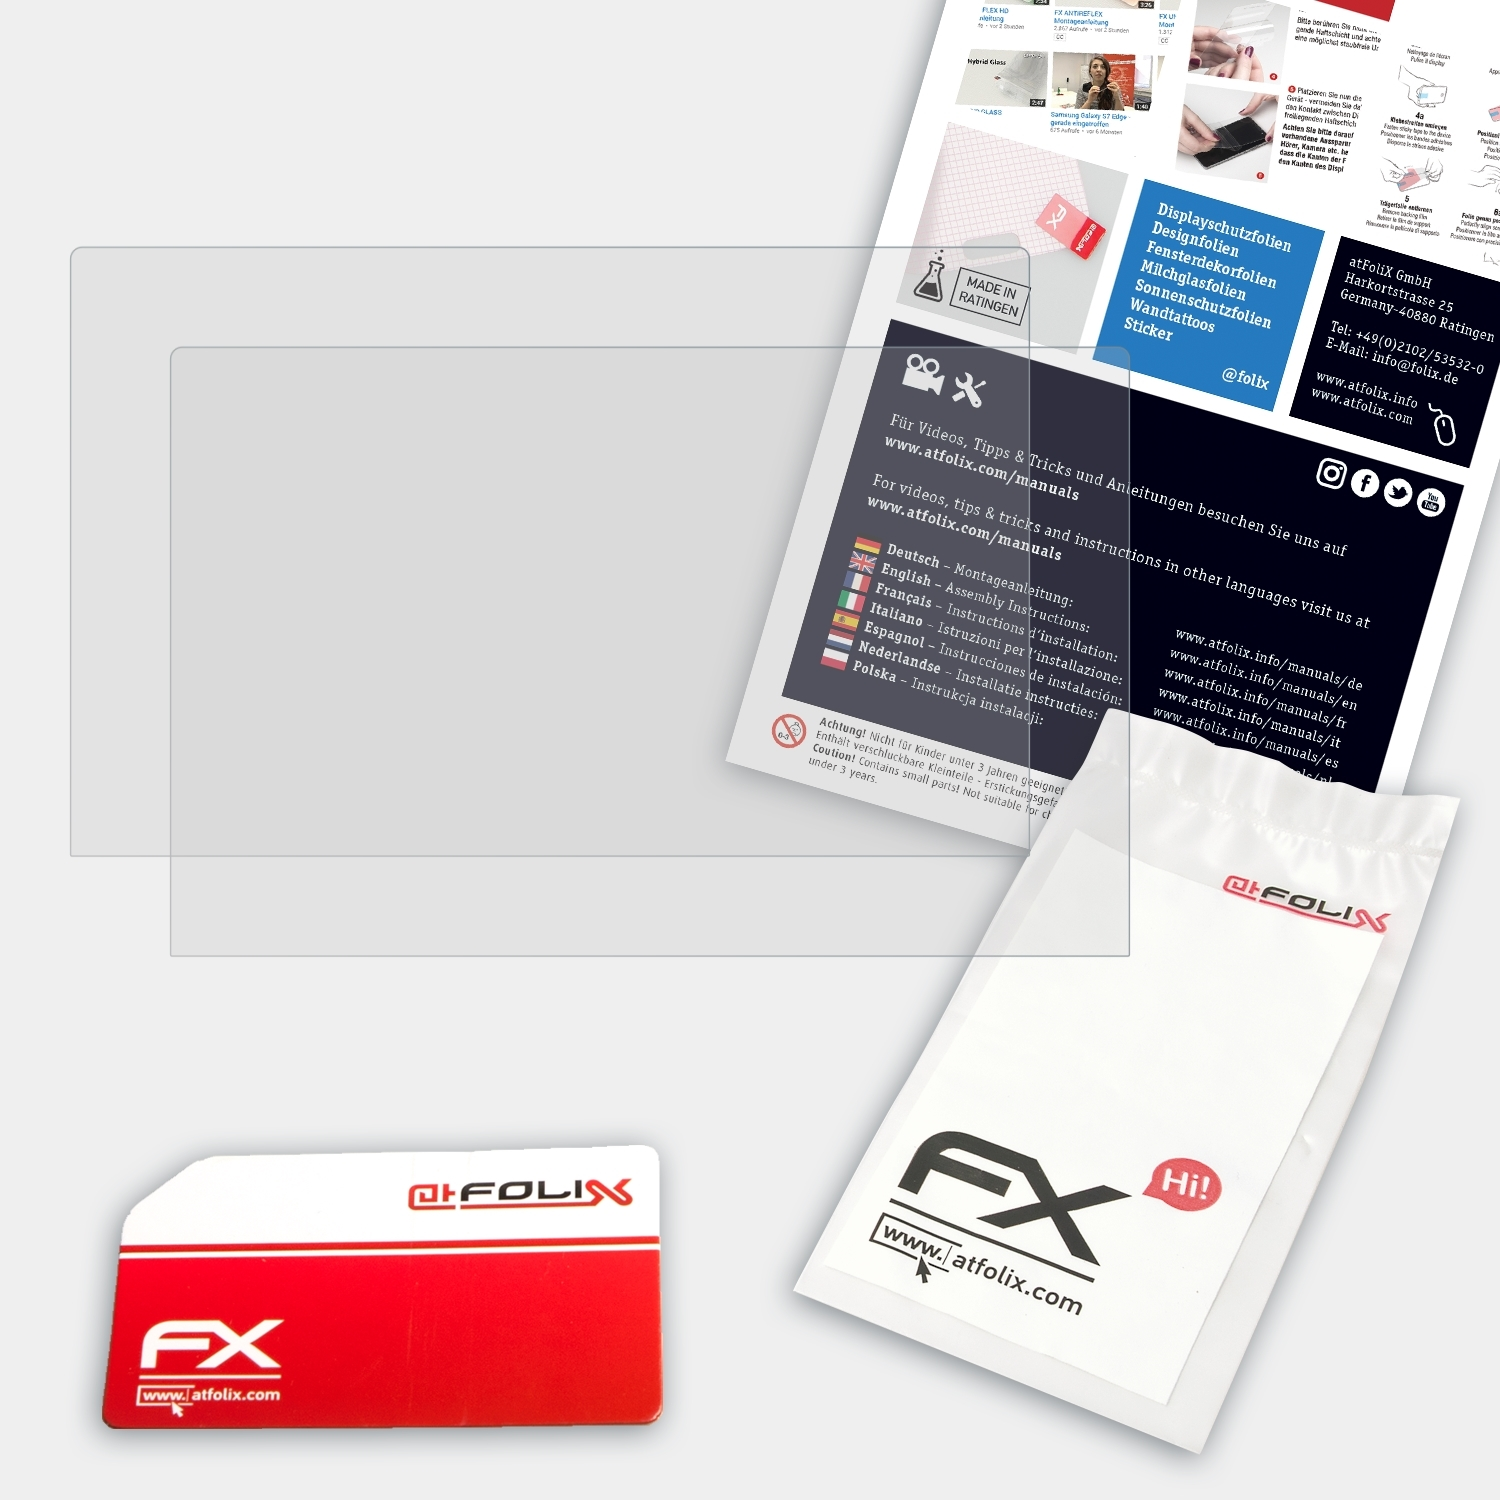 Asus 2x 14 Flip Displayschutz(für VivoBook (TP412UA)) ATFOLIX FX-Antireflex